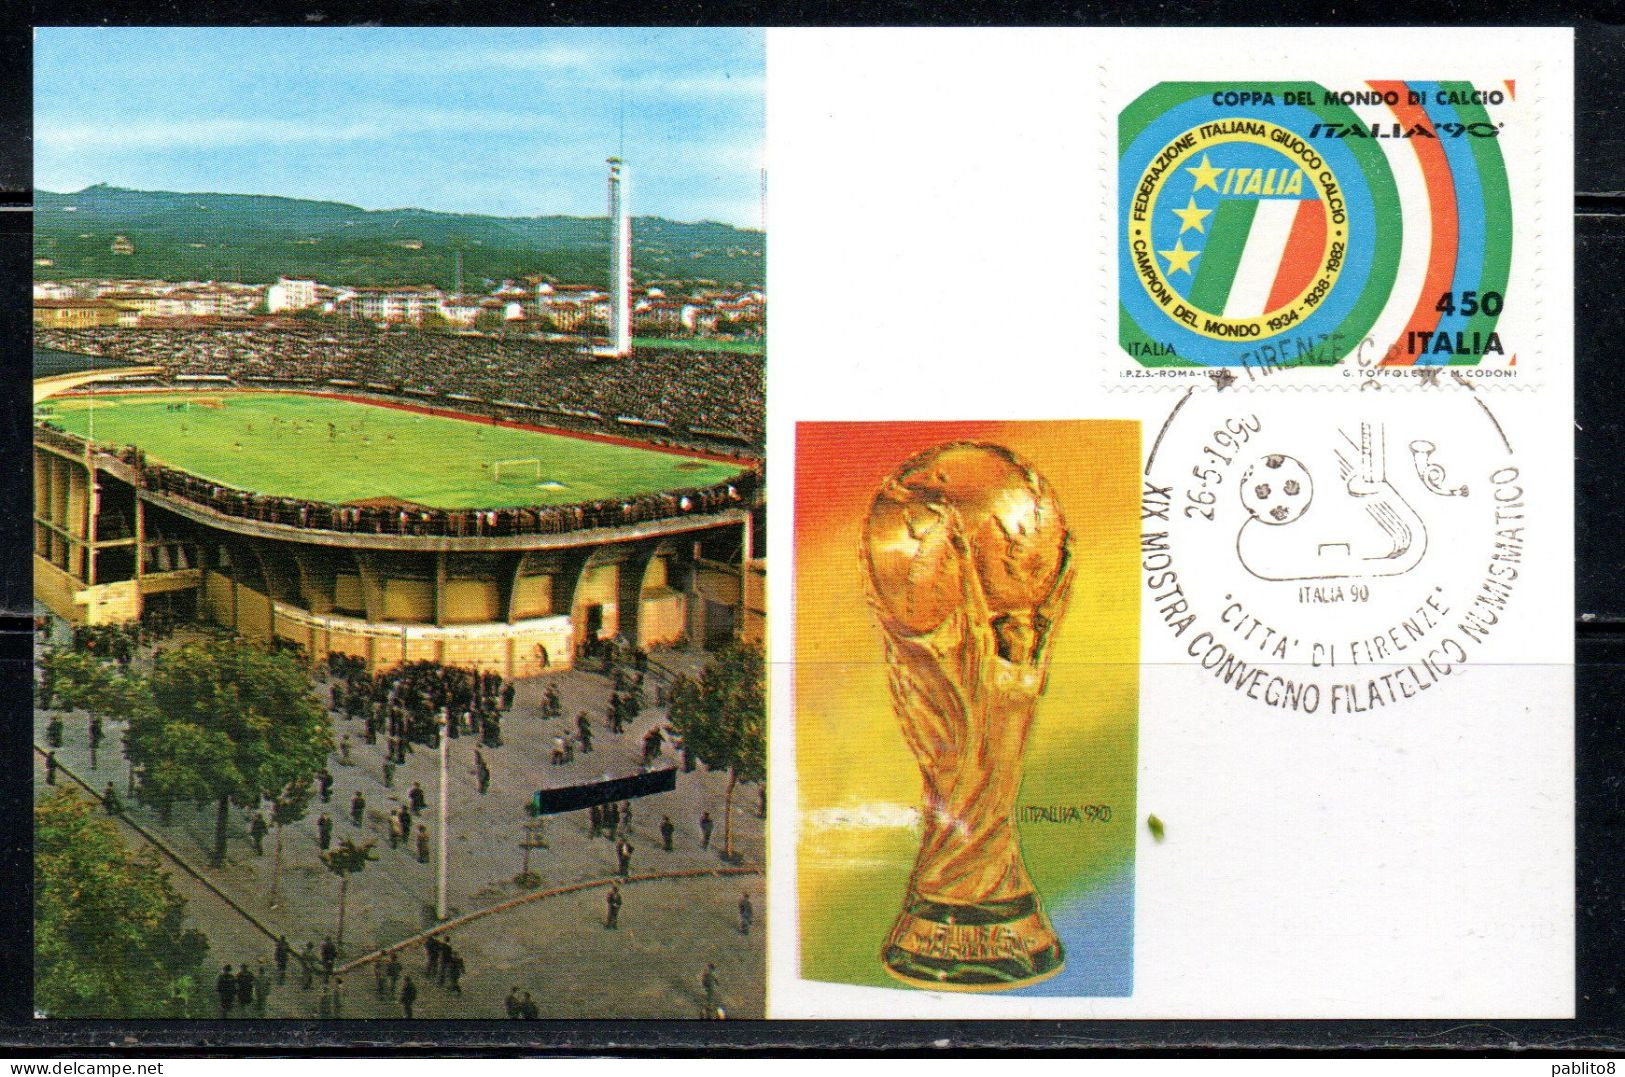 ITALIA 90 REPUBBLICA ITALY REPUBLIC 1990 COPPA DEL MONDO DI CALCIO ITALIA LIRE 450 MAXI MAXIMUM CARD CARTOLINA CARTE - Maximum Cards